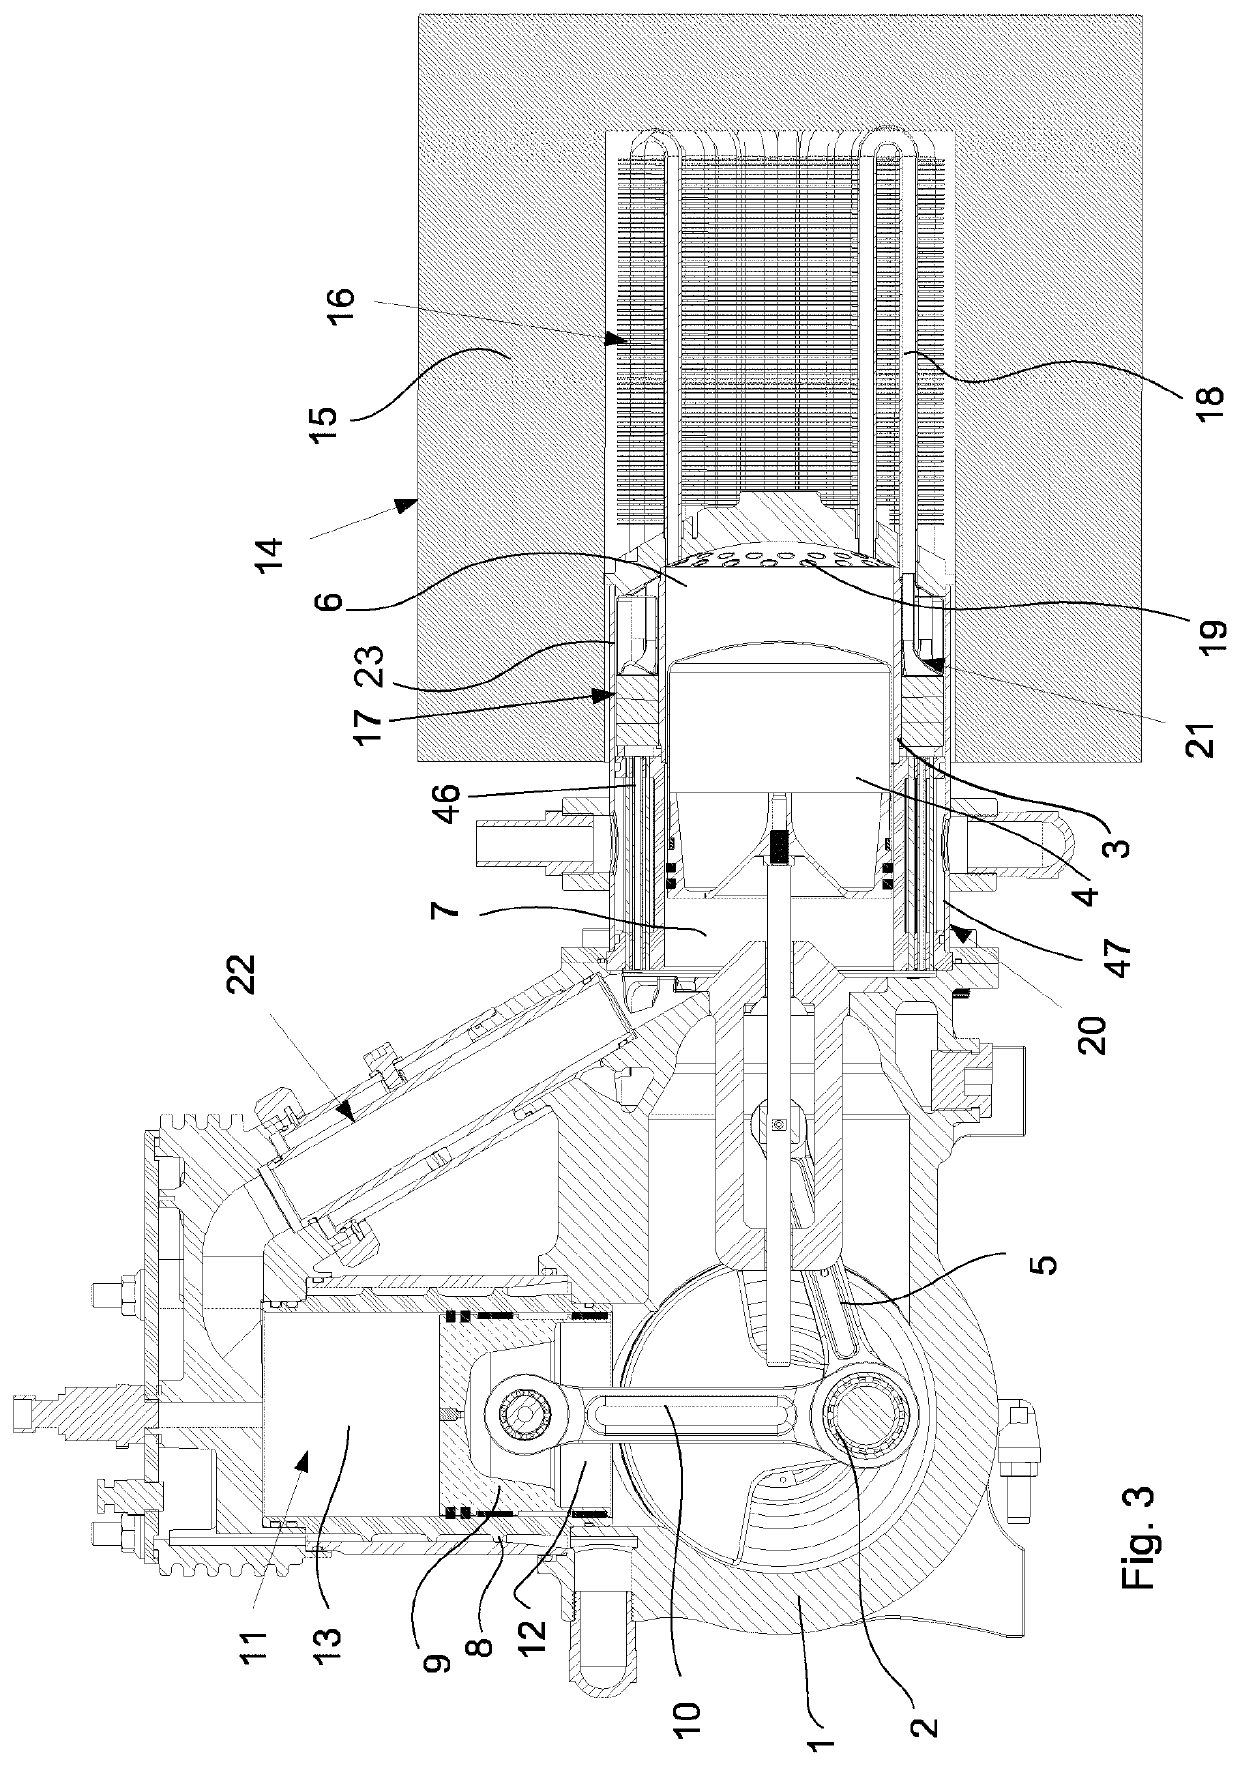 Stirling engine comprising metal foam regenerator